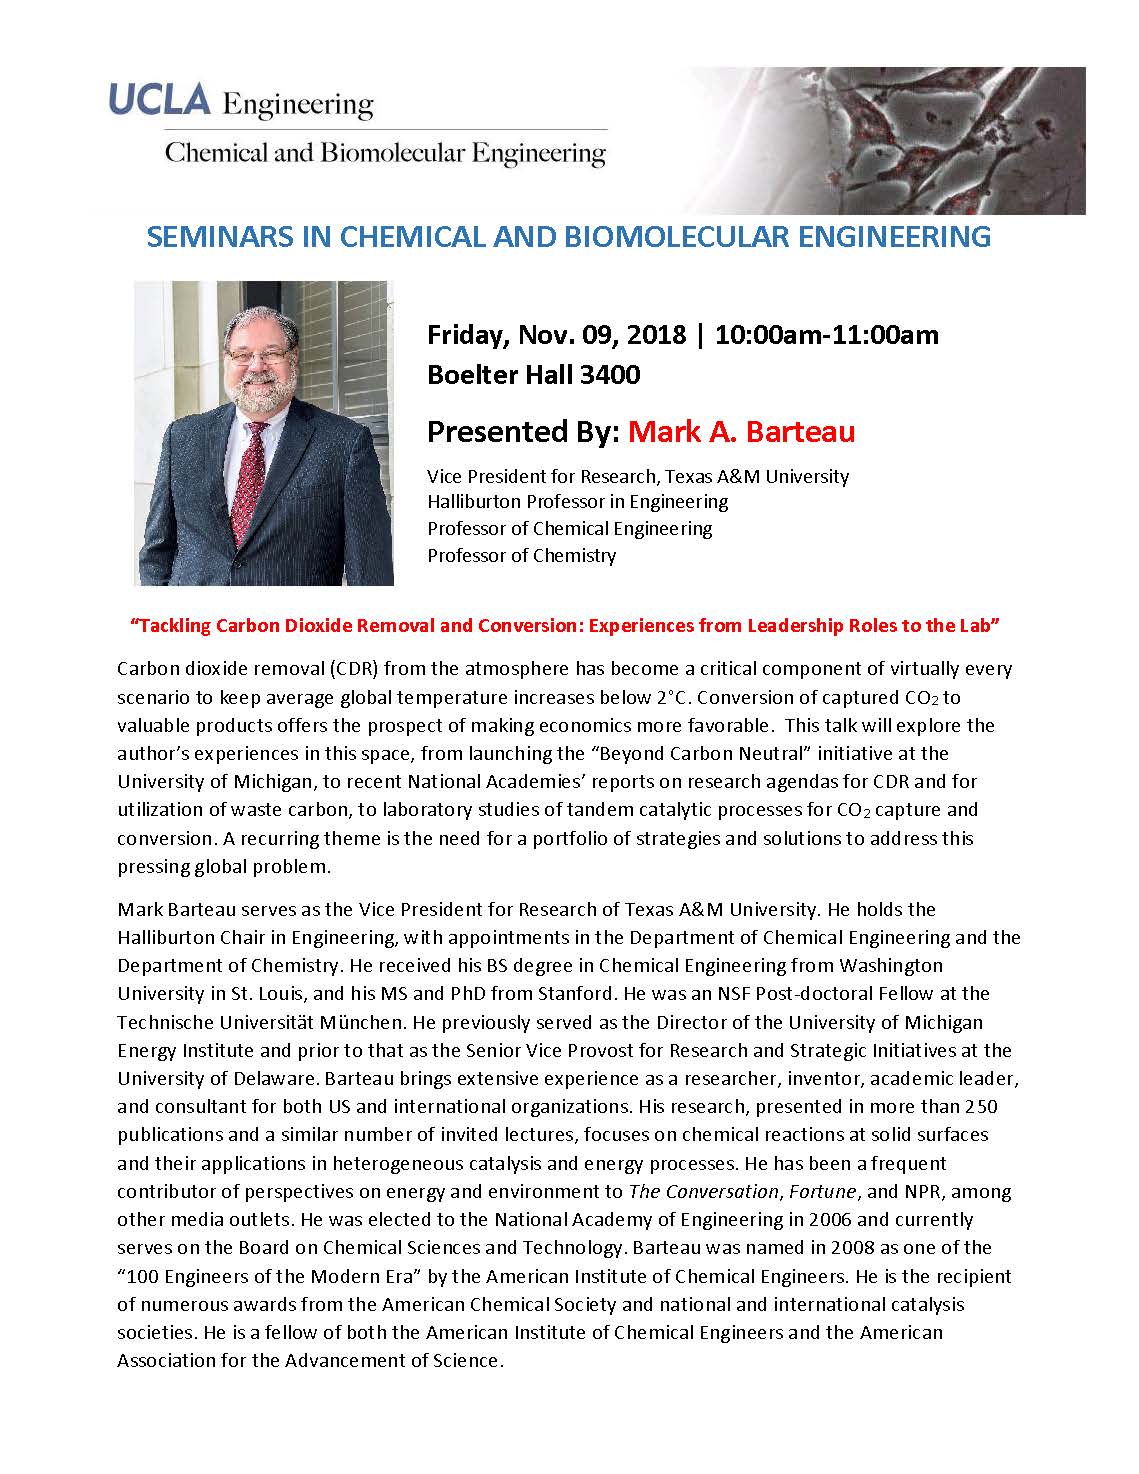 Seminar of Interest - Mark A. Barteau and Chemical & Biomolecular Engineering